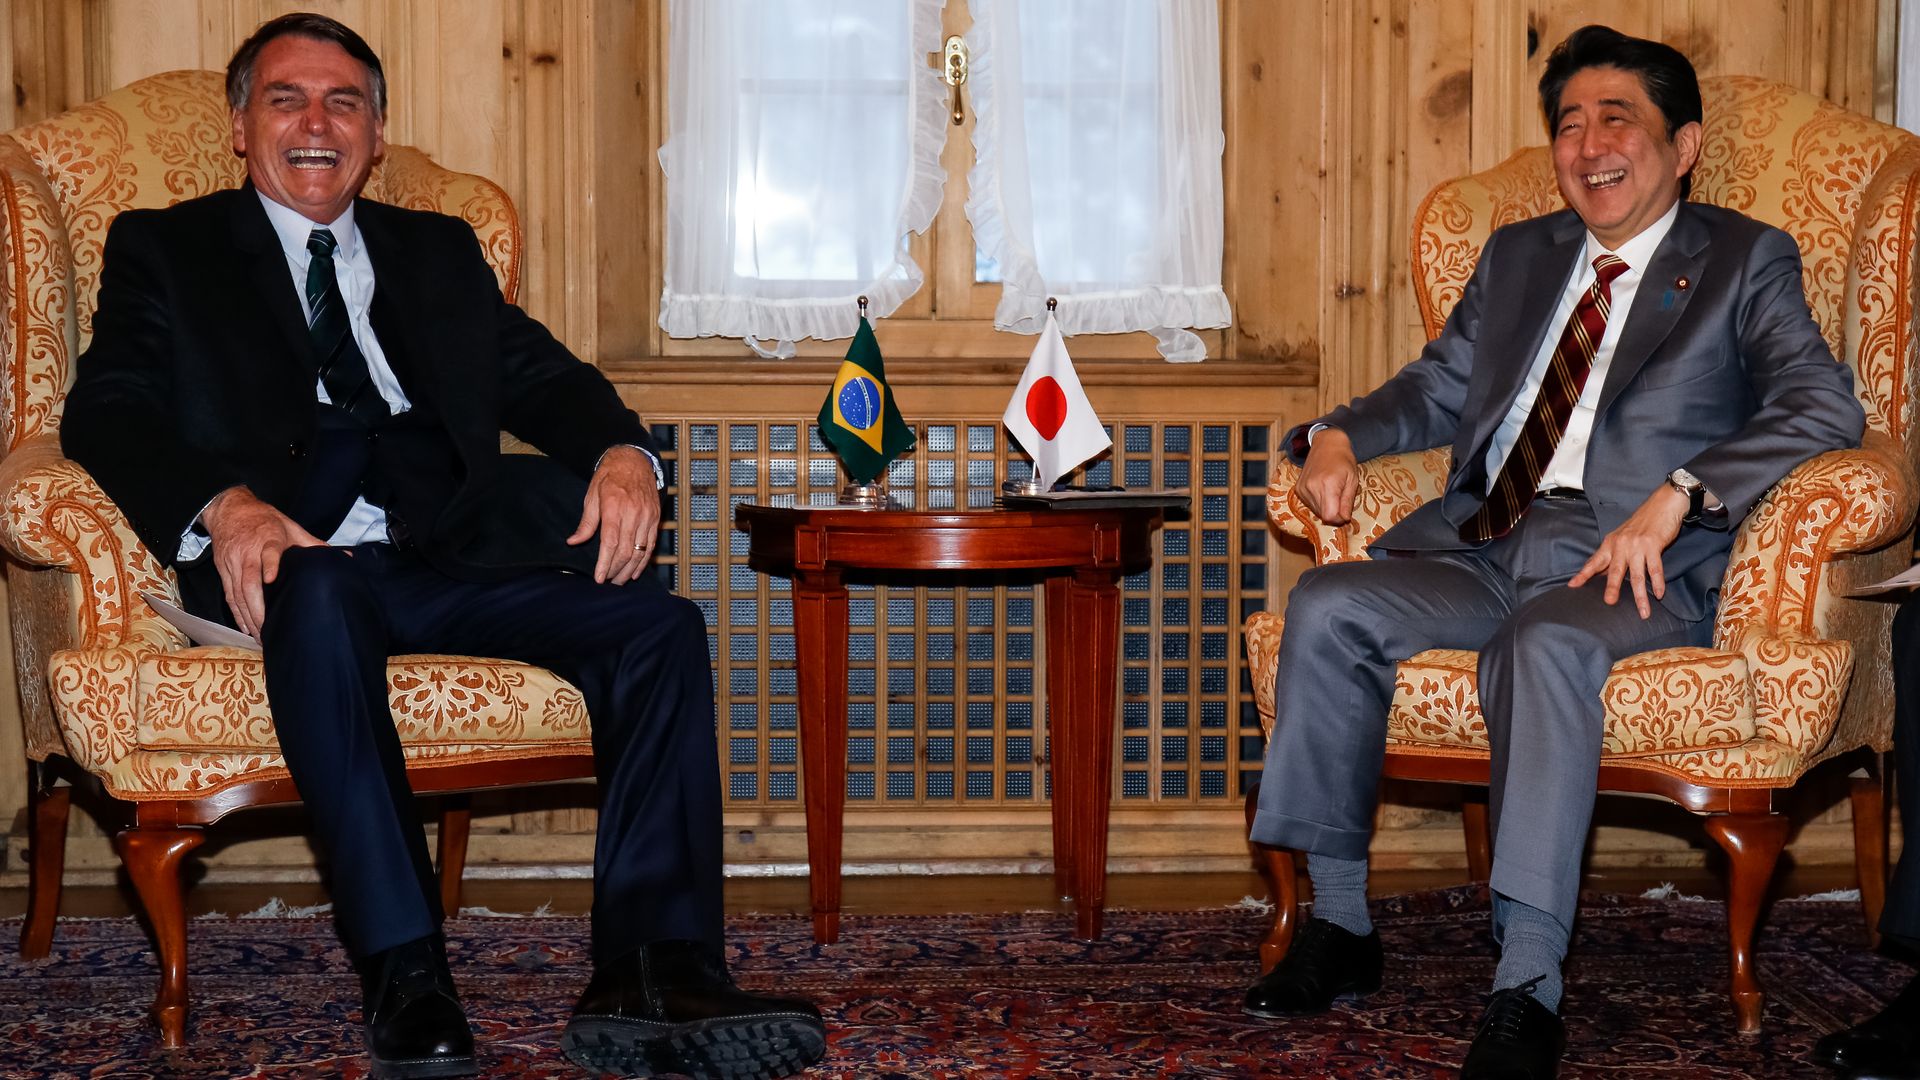 Brazilian President Jair Bolsonaro laughs with Japanese Prime Minister Shinzo Abe at the World Economic Forum in Davos